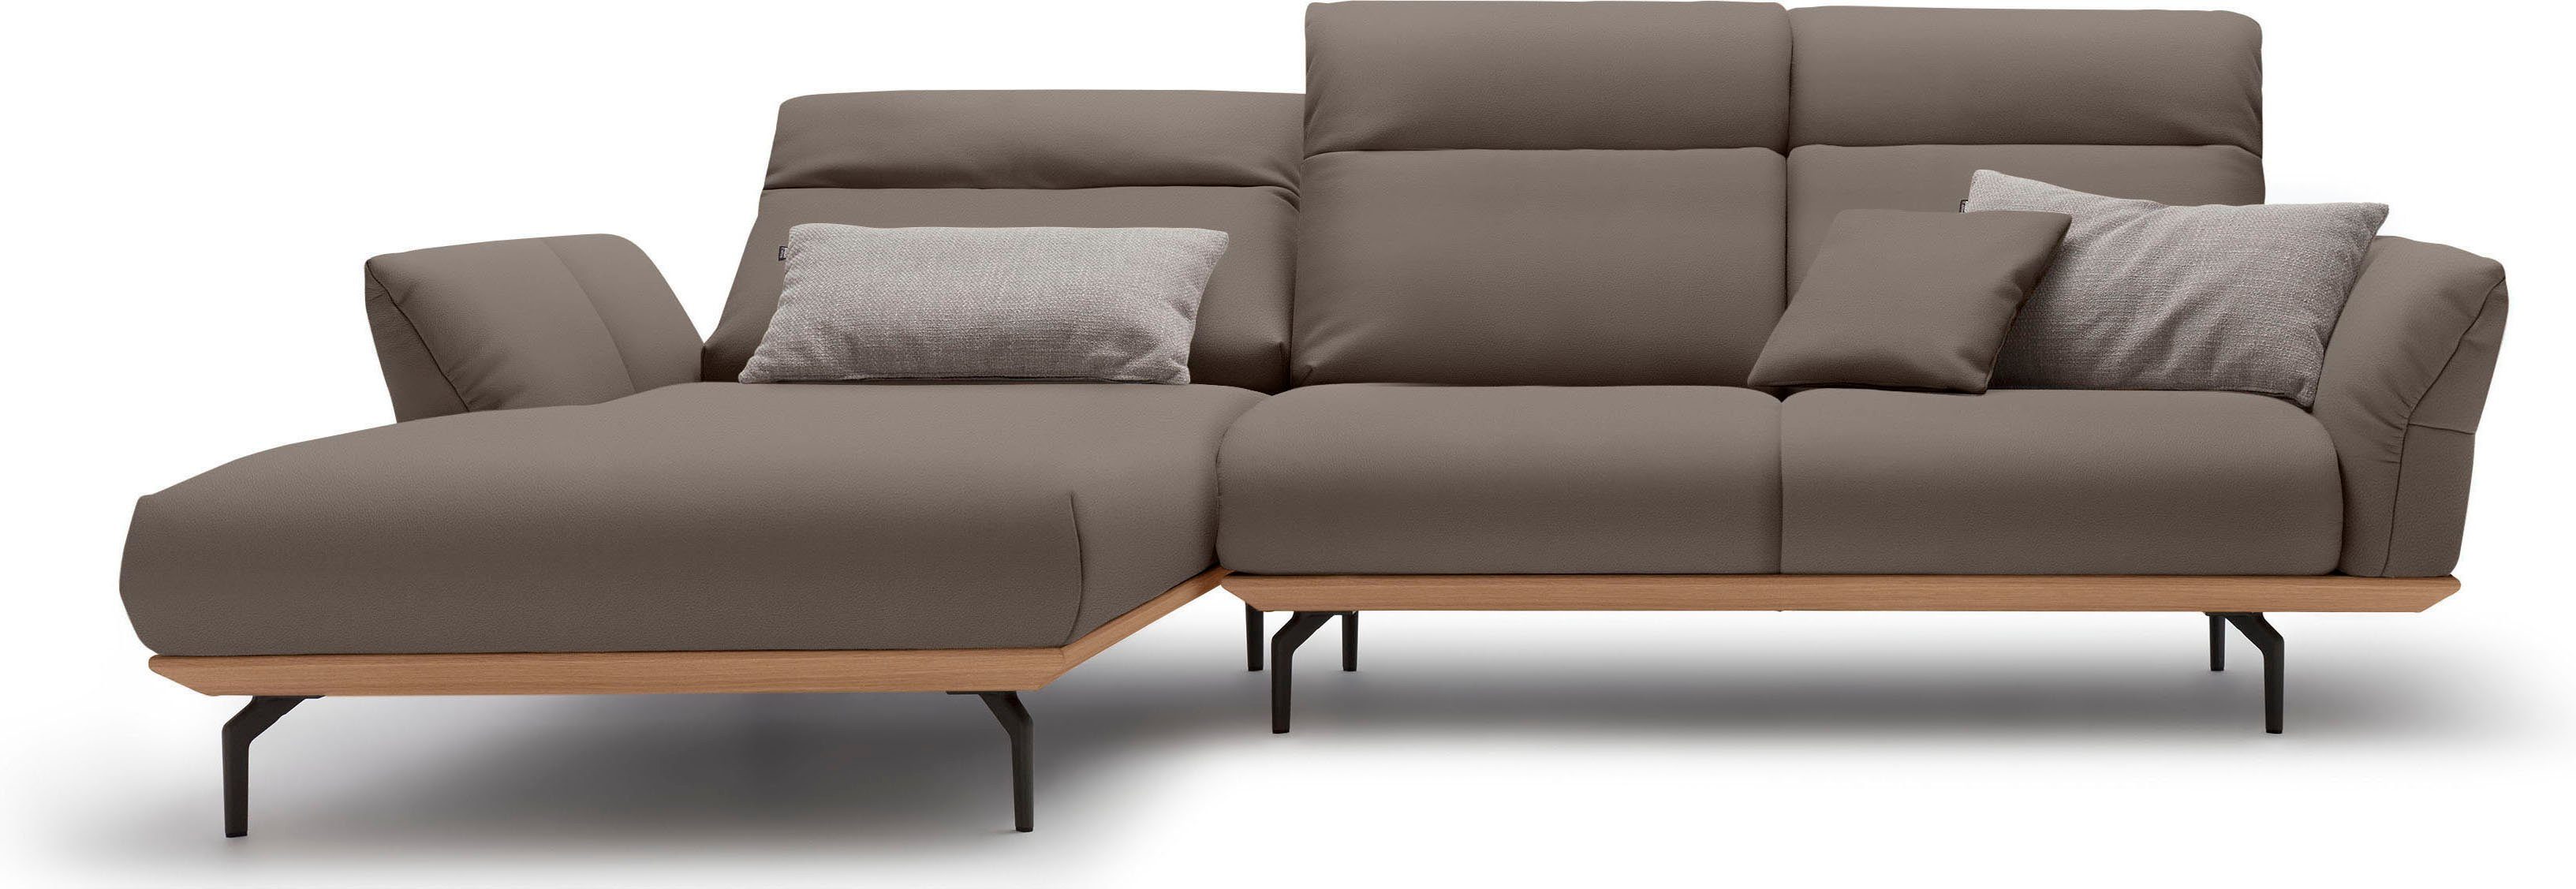 hülsta sofa Ecksofa Alugussfüße Sockel umbragrau, hs.460, Eiche, cm in in 298 Breite